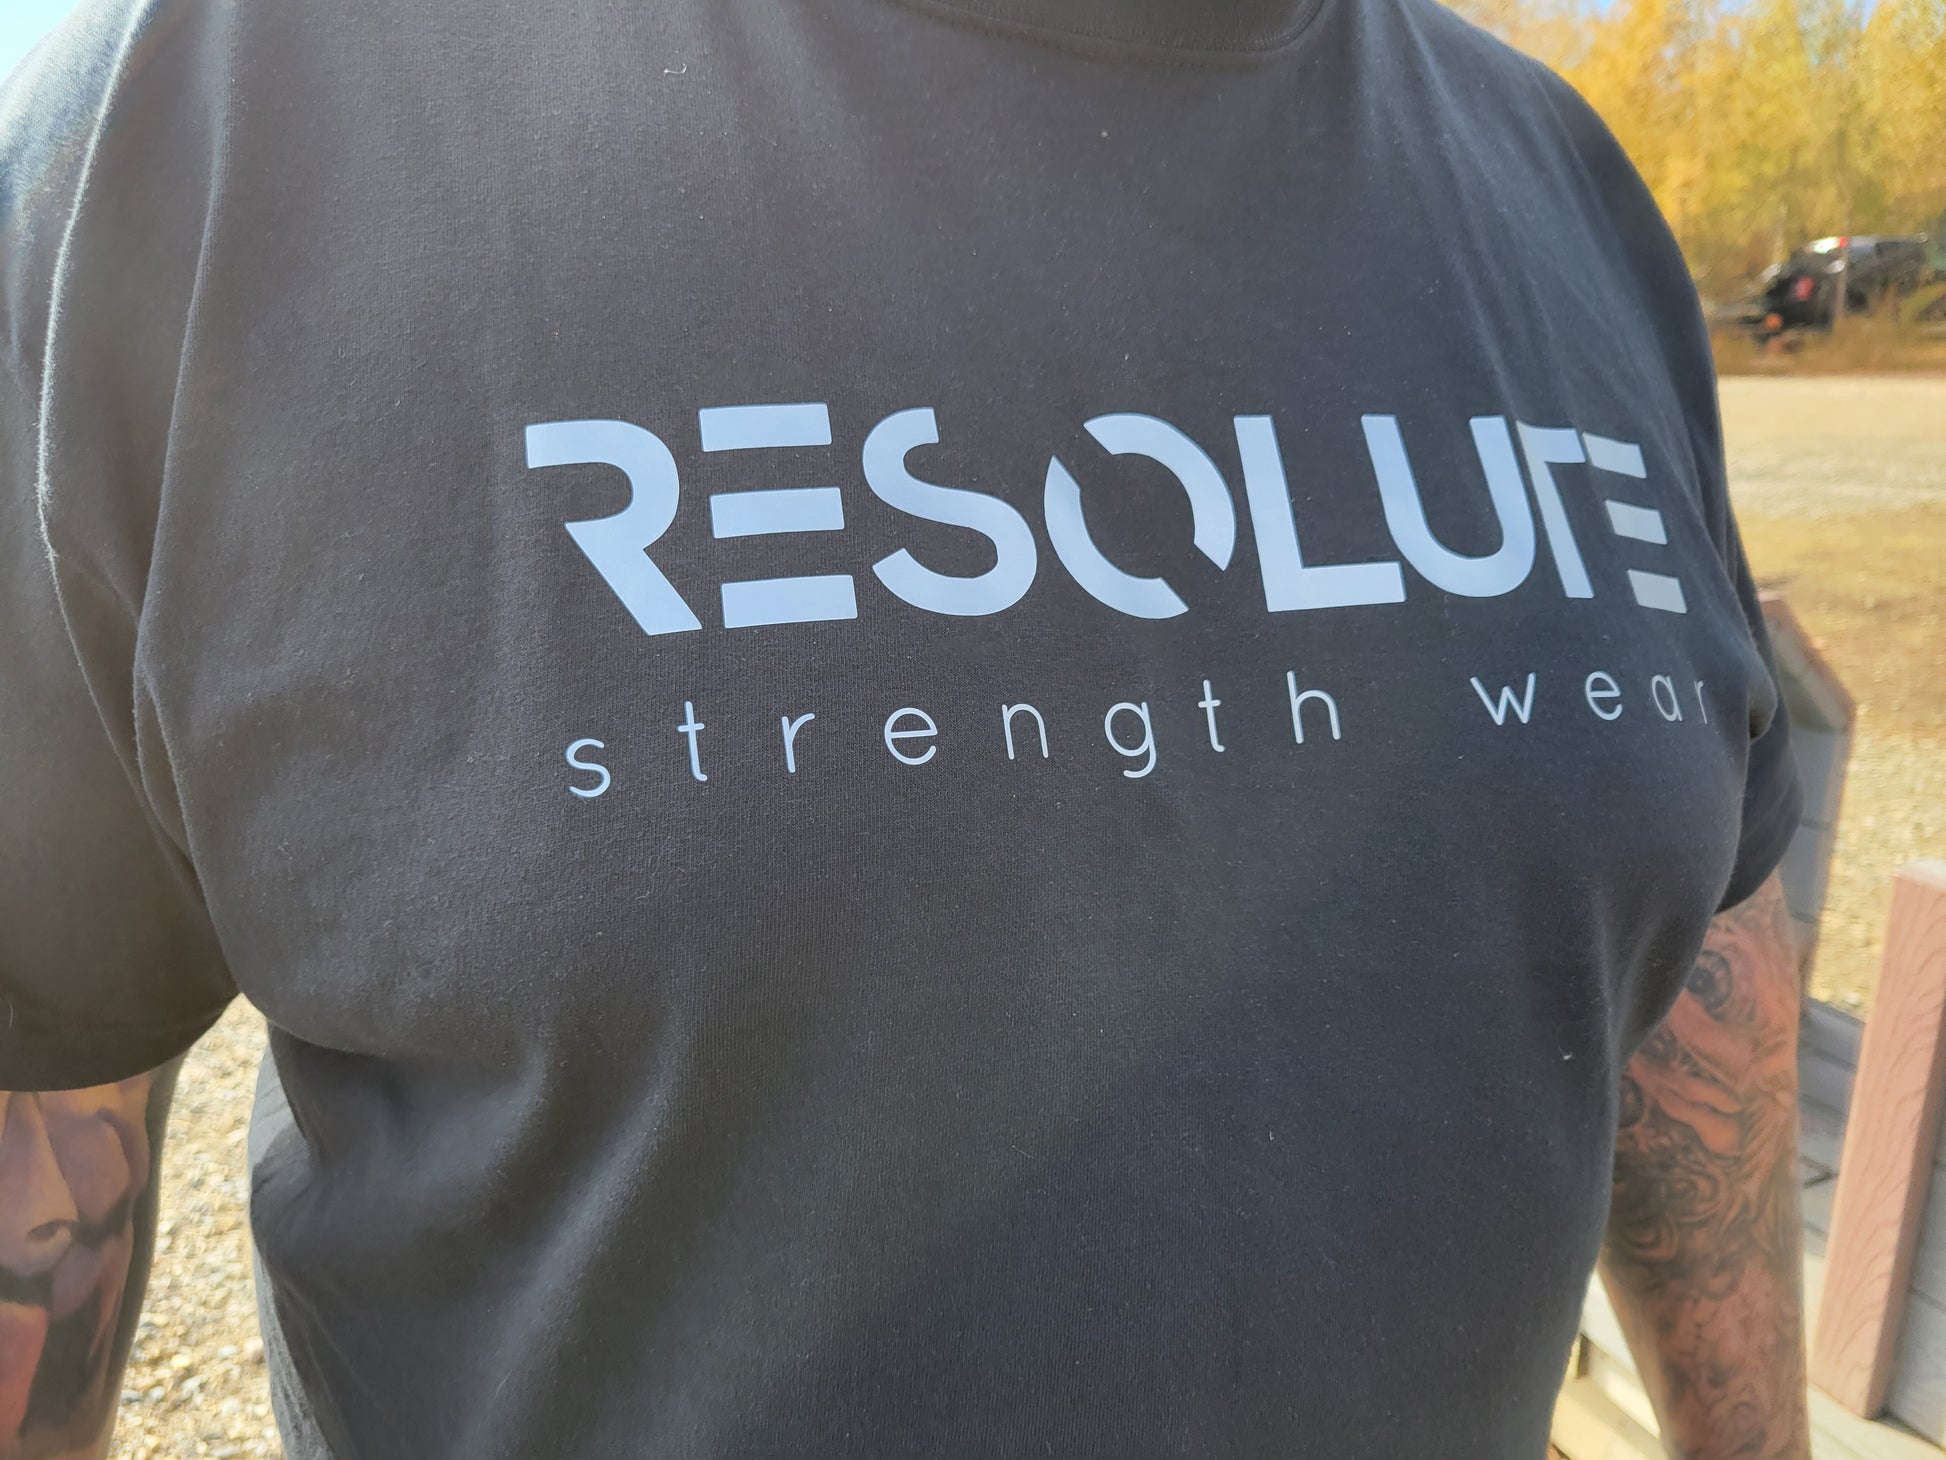 Its a Battleground Tshirt - Resolute Strength Wear